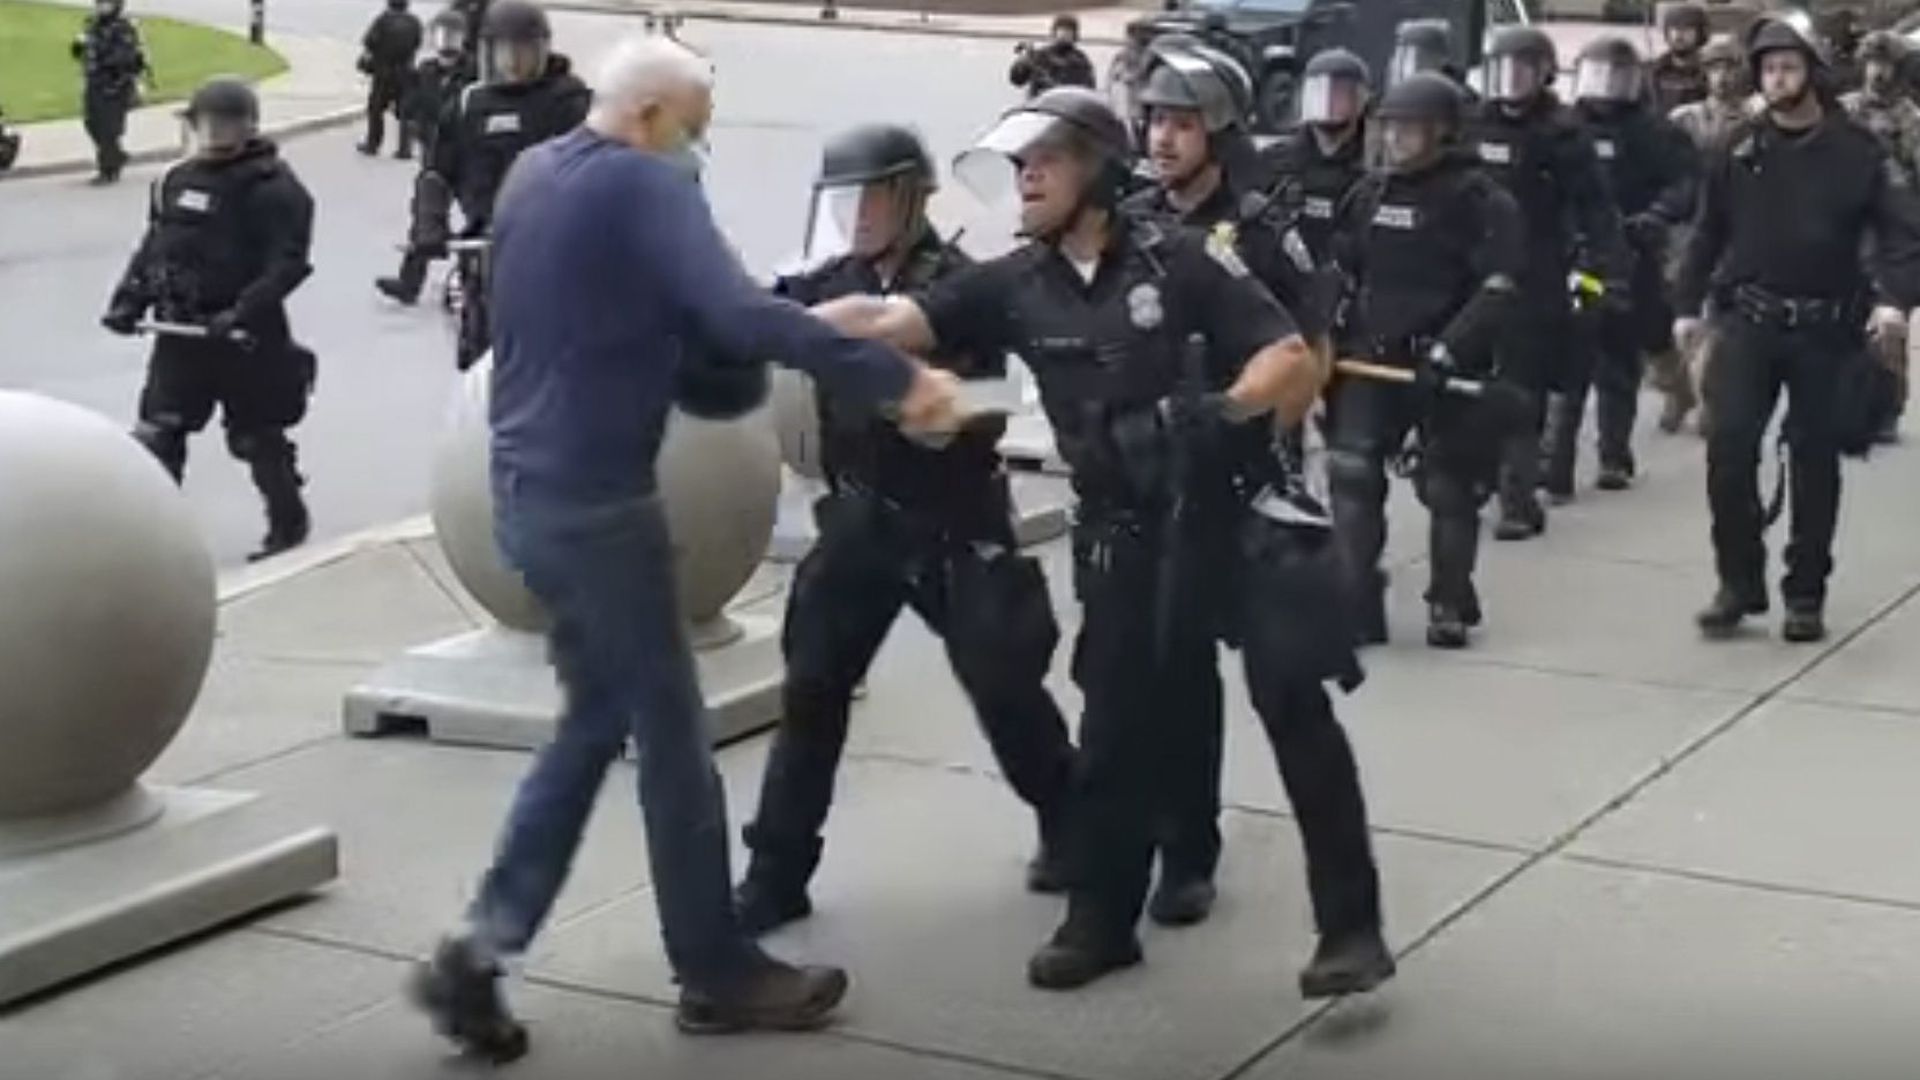 Buffalo police can be seen shoving an elderly protester